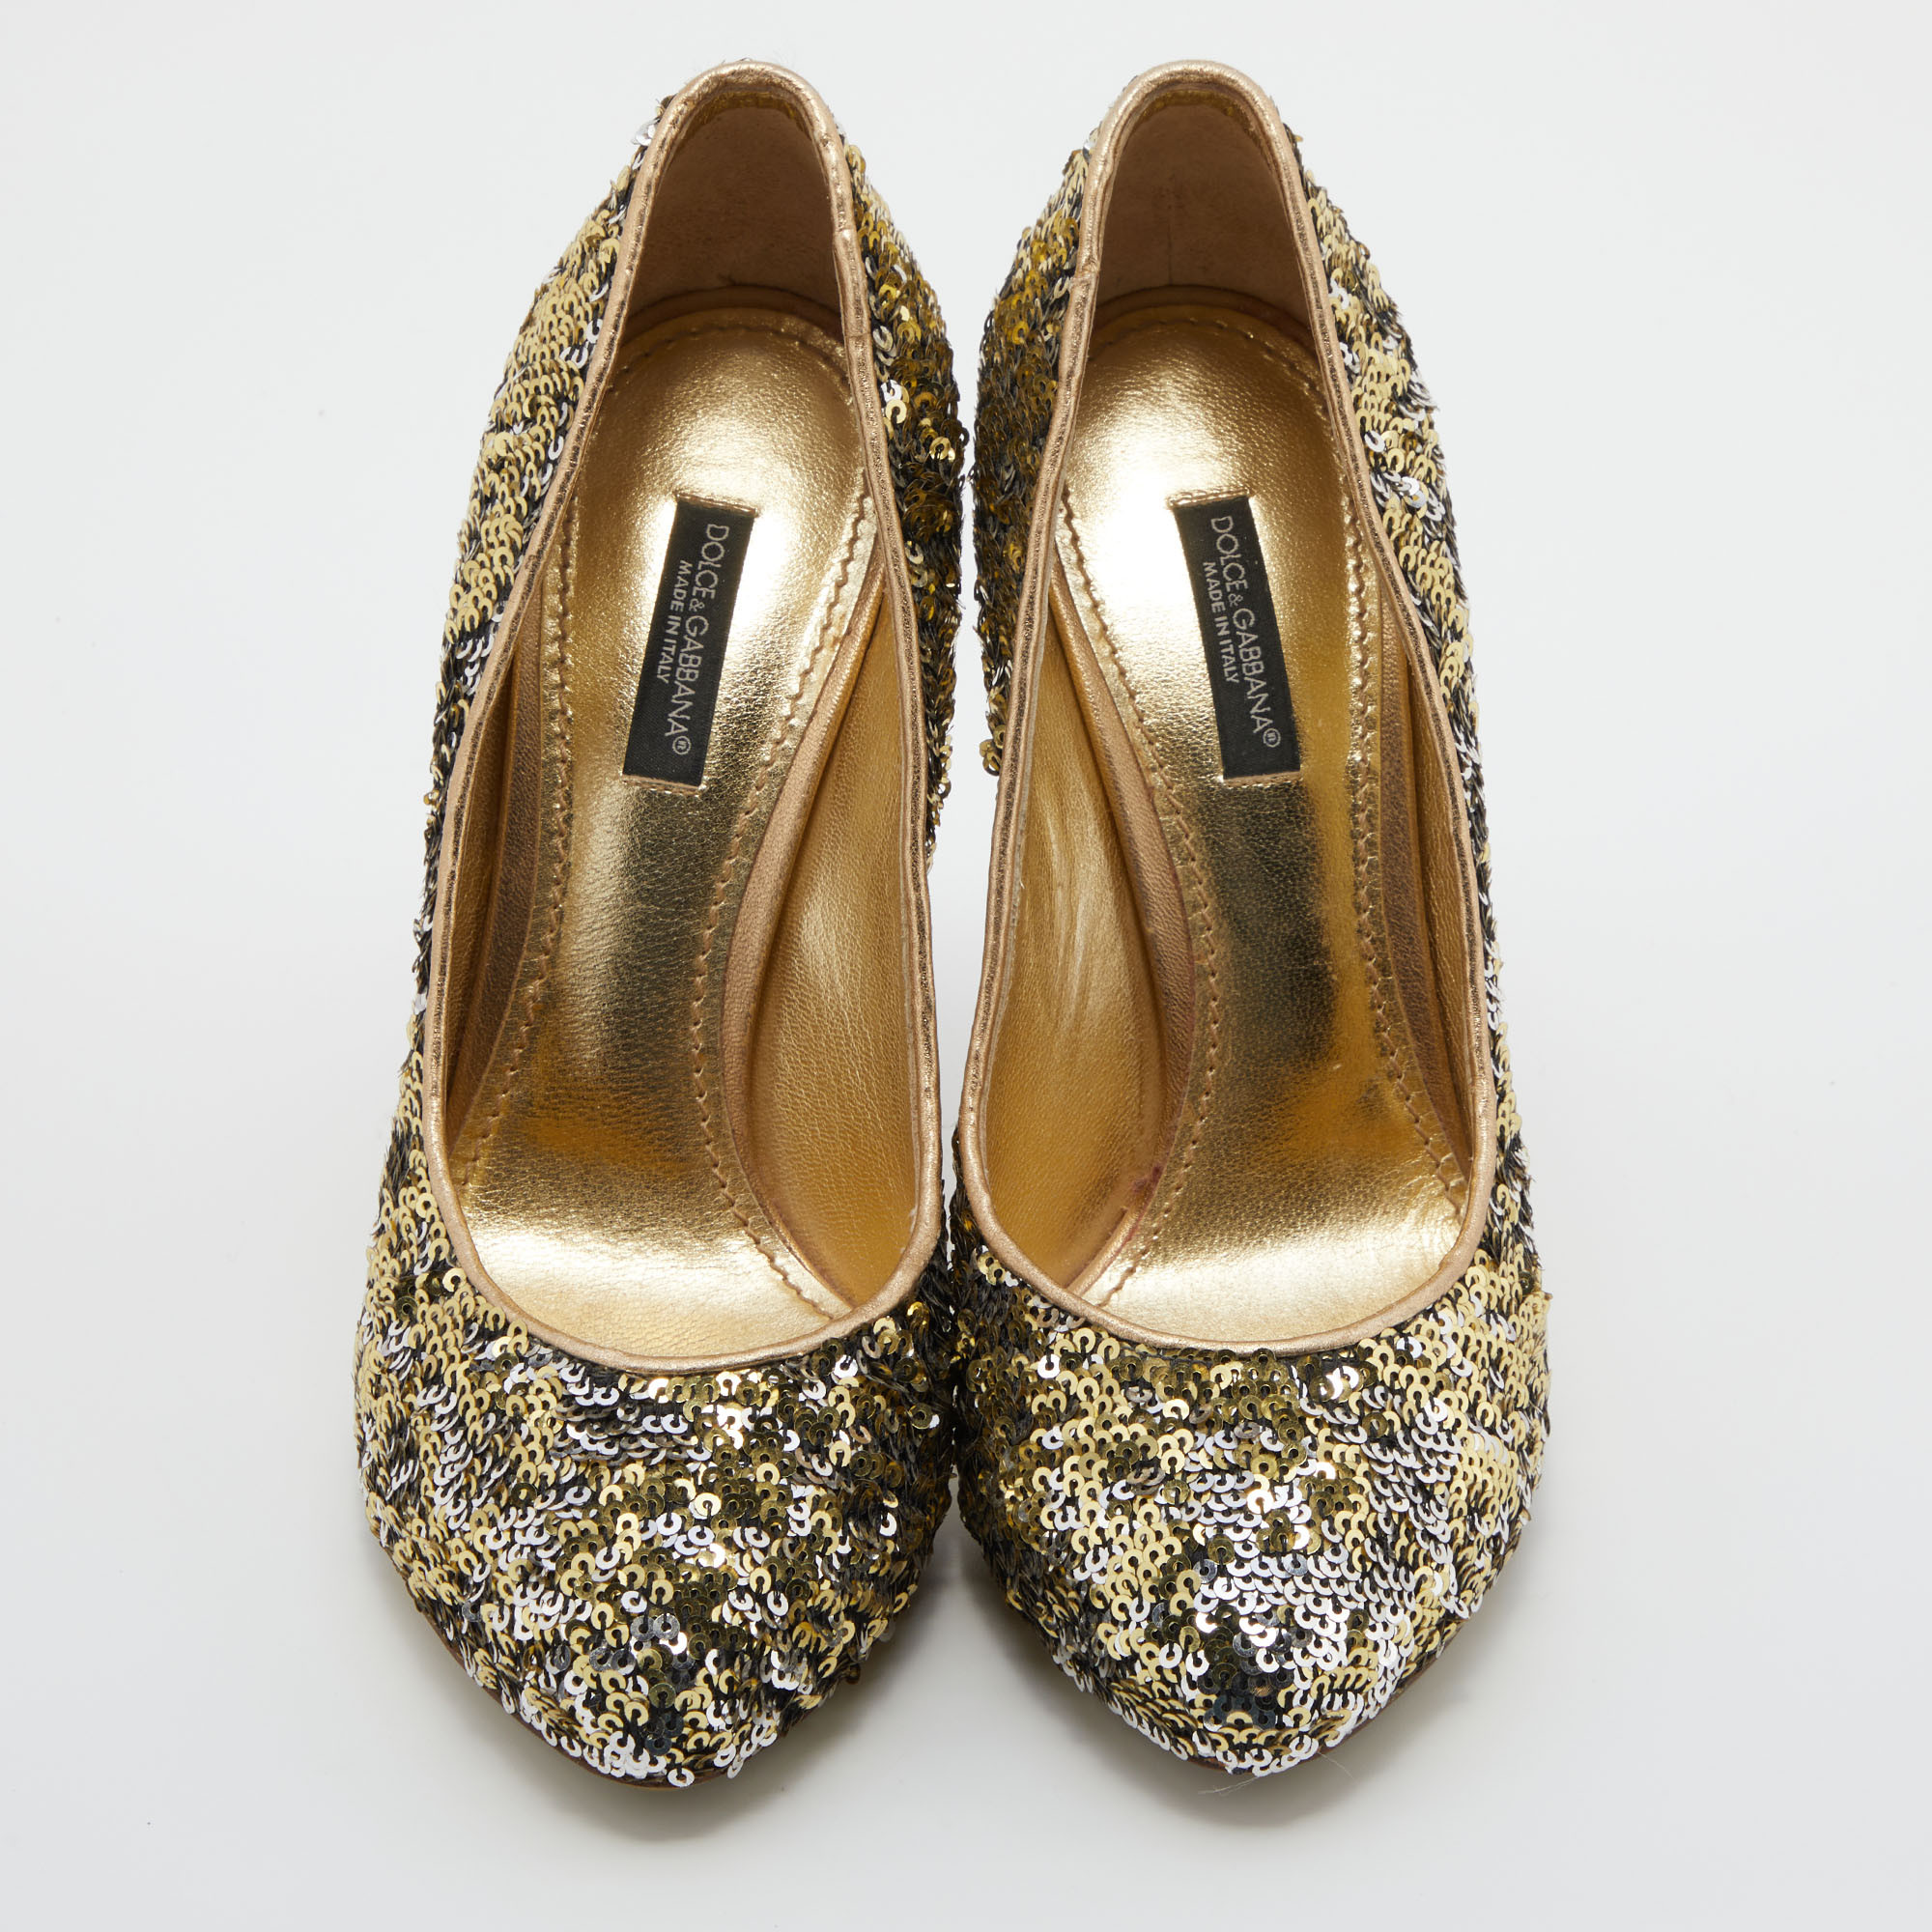 Dolce & Gabbana Metallic Gold/Silver Sequins Round Toe Pumps Size 36